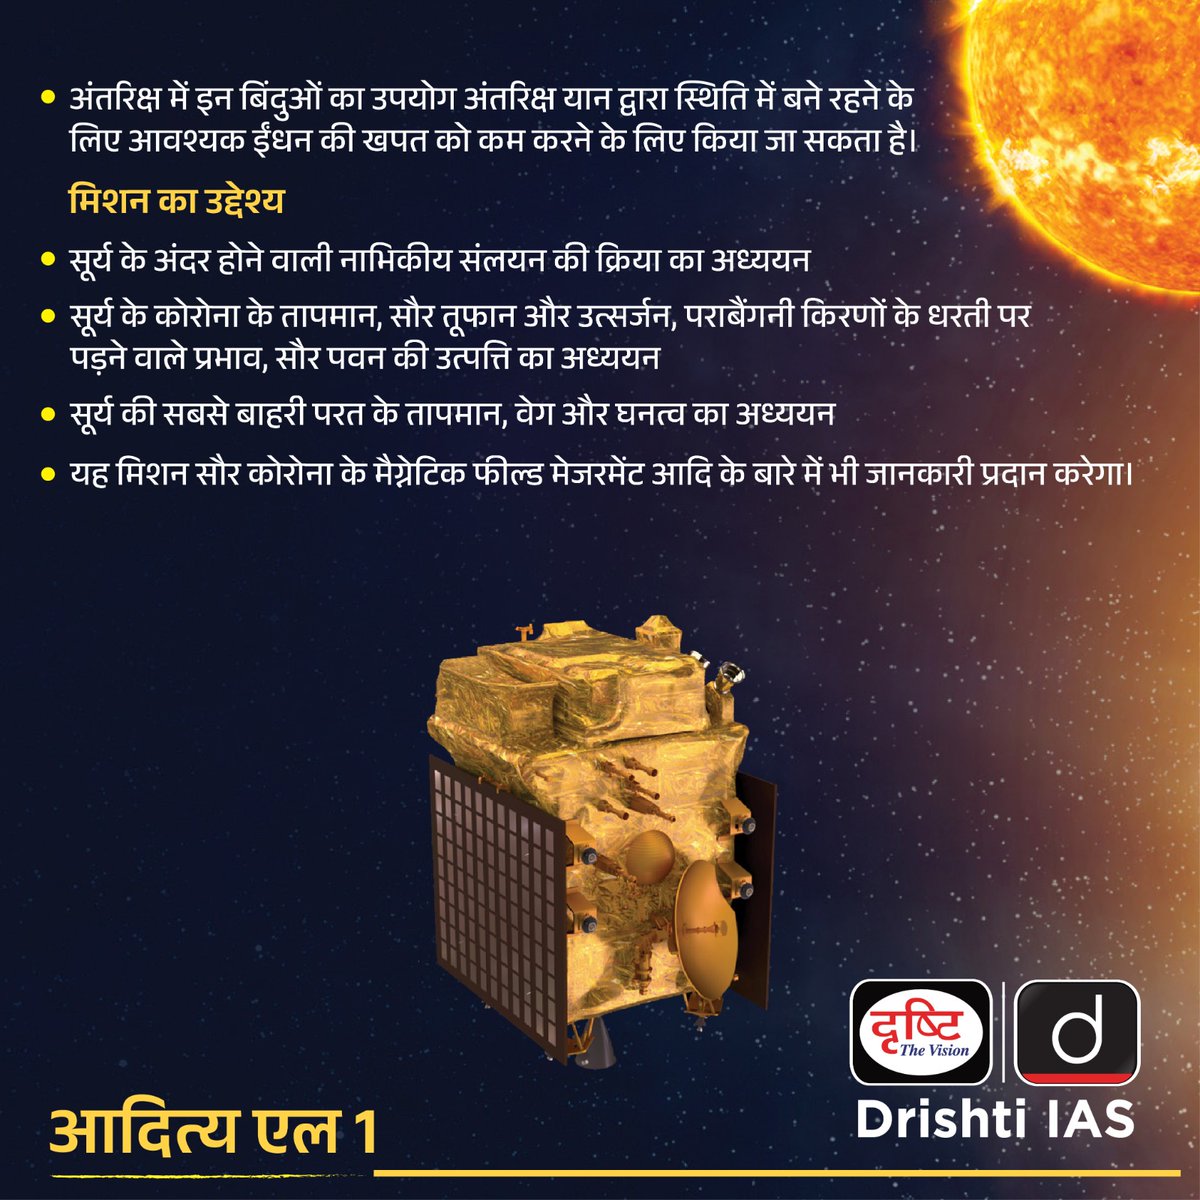 सूर्य के अध्ययन के लिए  लॉन्च किया गया आदित्य L-1 मिशन
.
#ISRO #adityaL1 #SUN #FingersCrossedForAdityaL1 #BharatSeSuryaTak #LagrangePoints #Sunstudy
#ISRO #IndiaOnMoon  #southpole #ISRO #NASA #Indians #drishtiias #drishtipcs